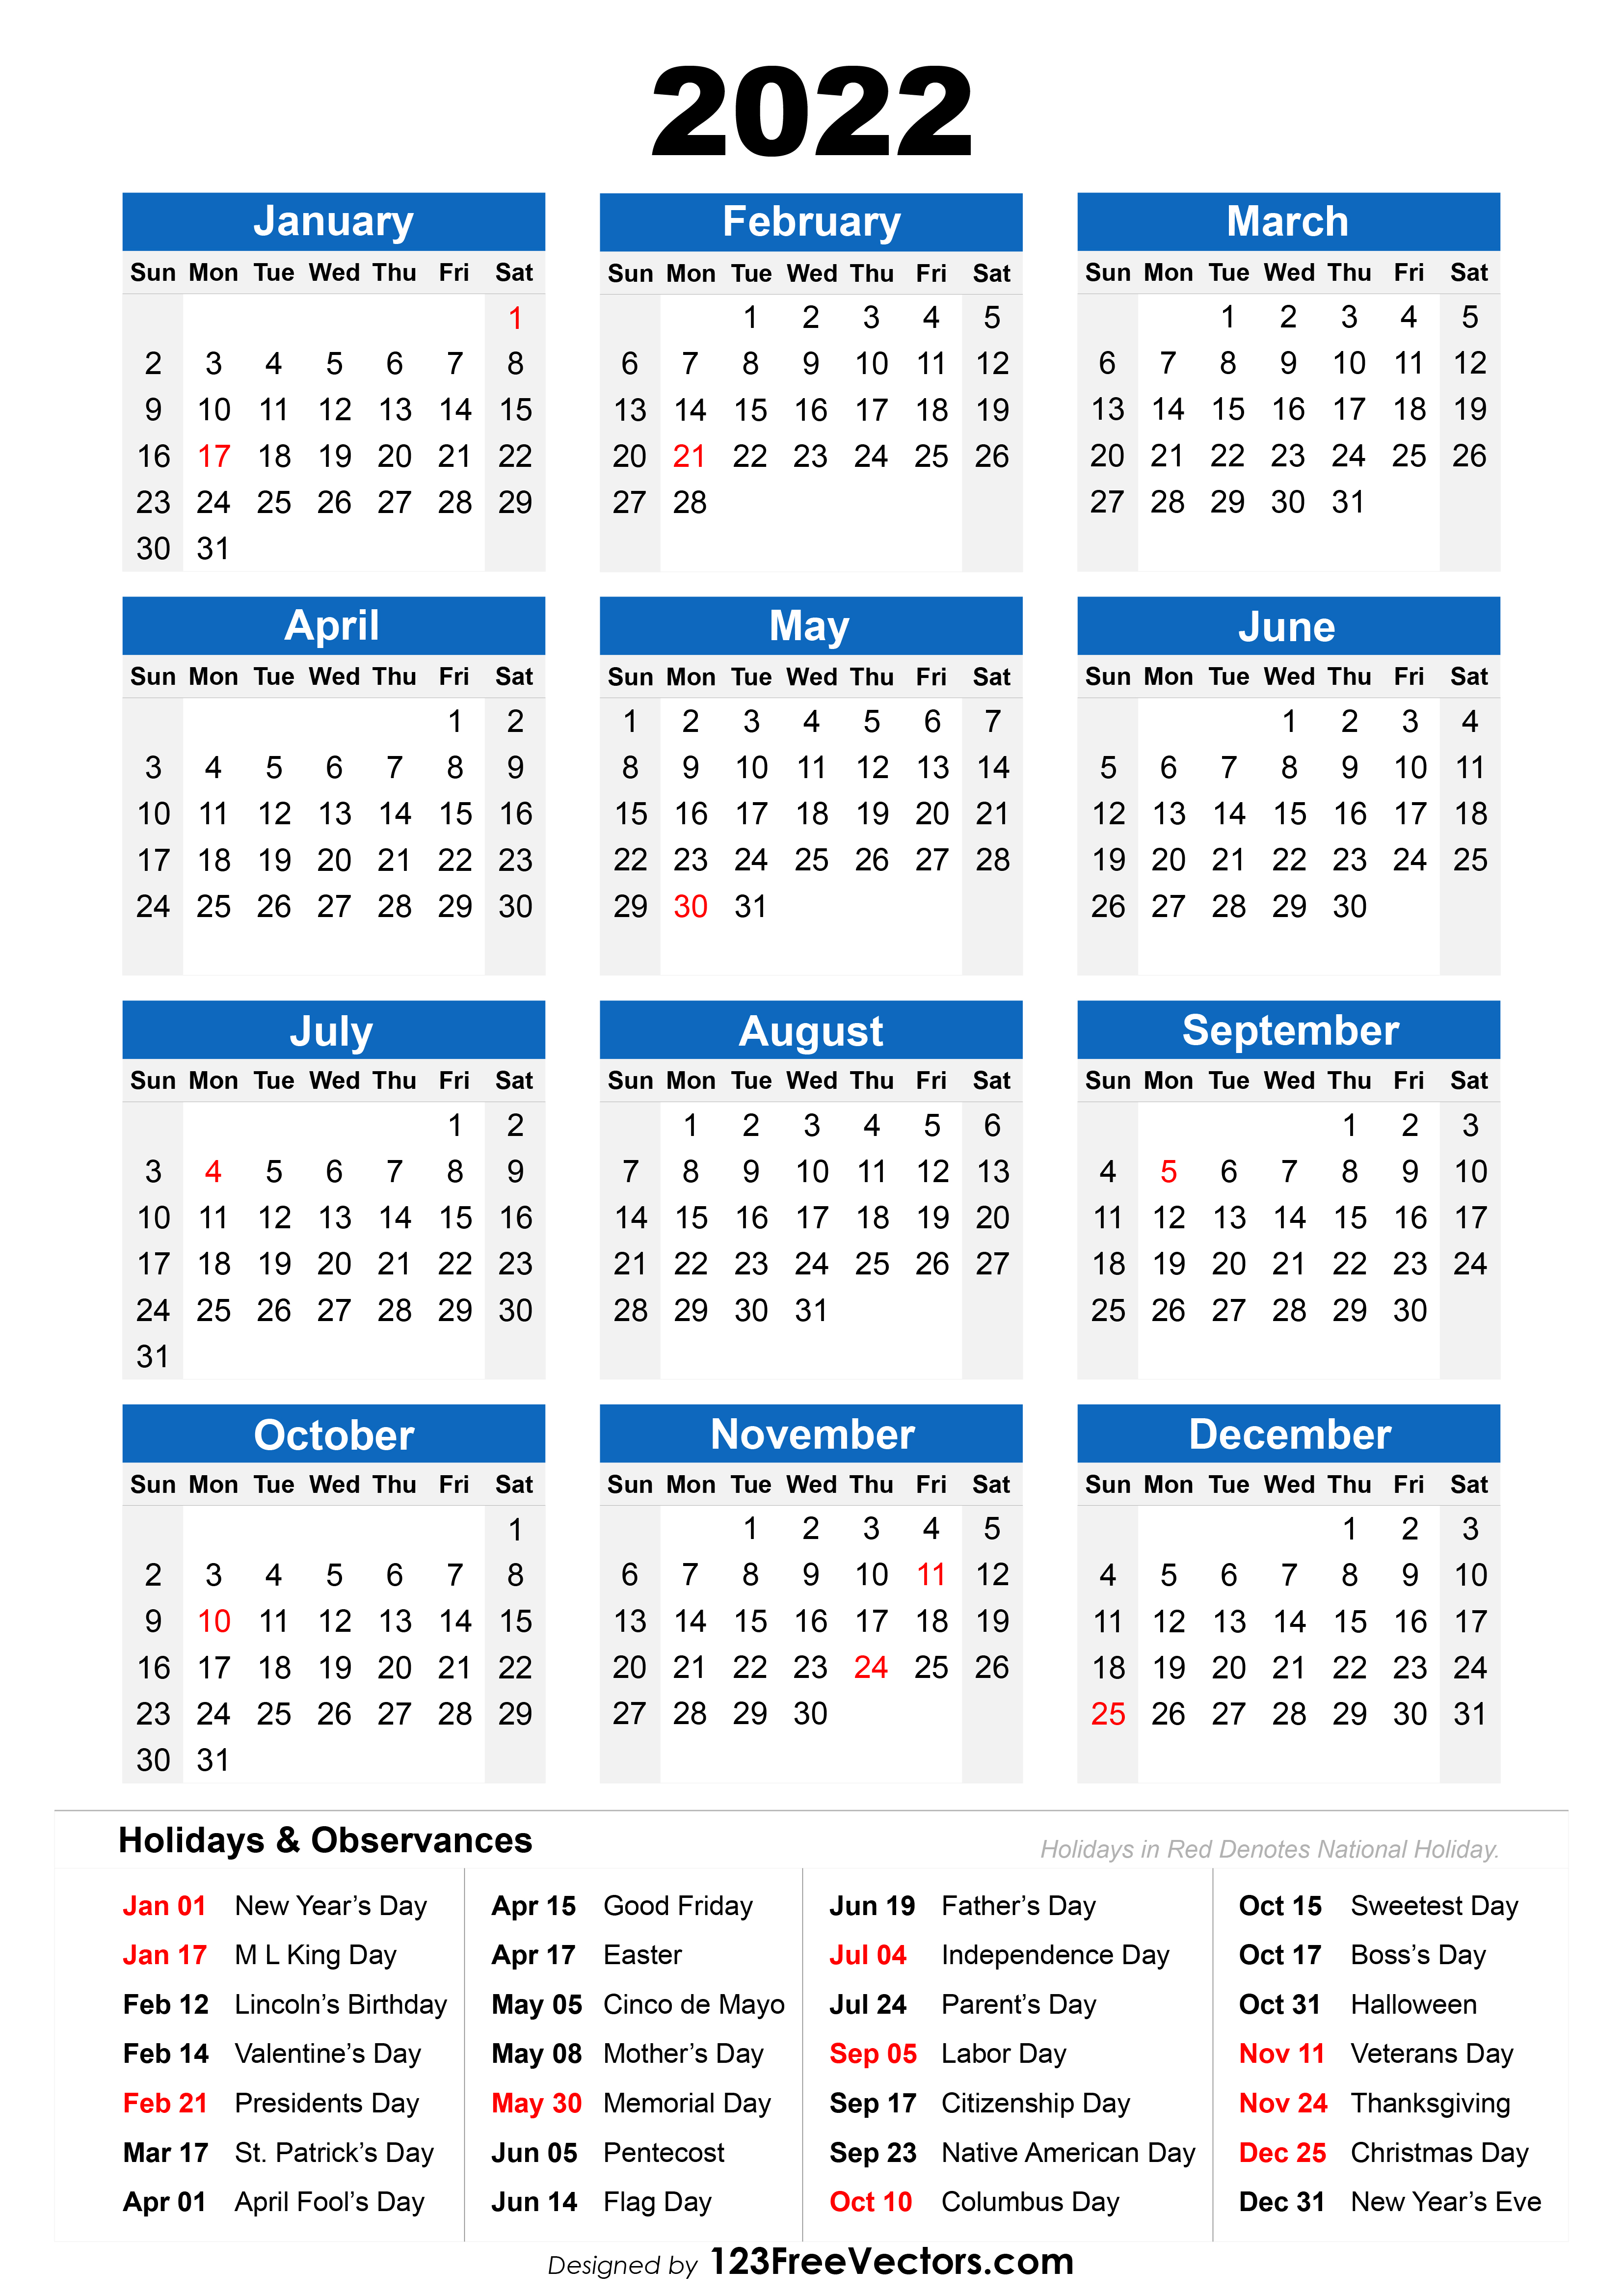 Free 2022 Holiday Calendar